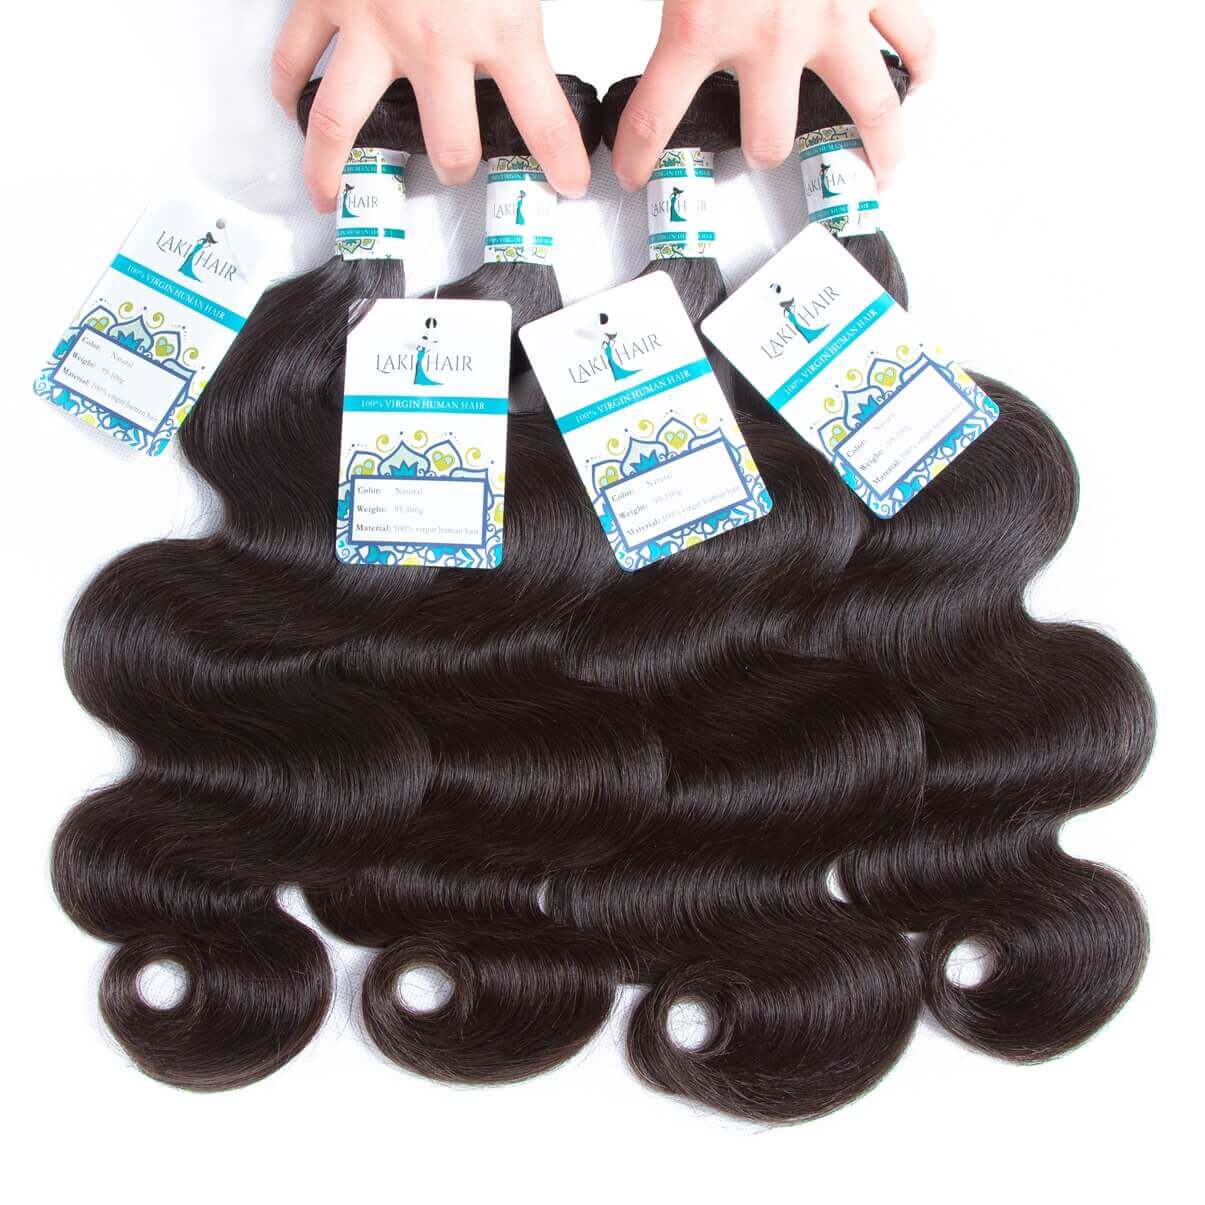 Lakihair Human Hair Bundles Body Wave 4 Bundles Brazilian/Indian/Peruvian/Malaysian Hair